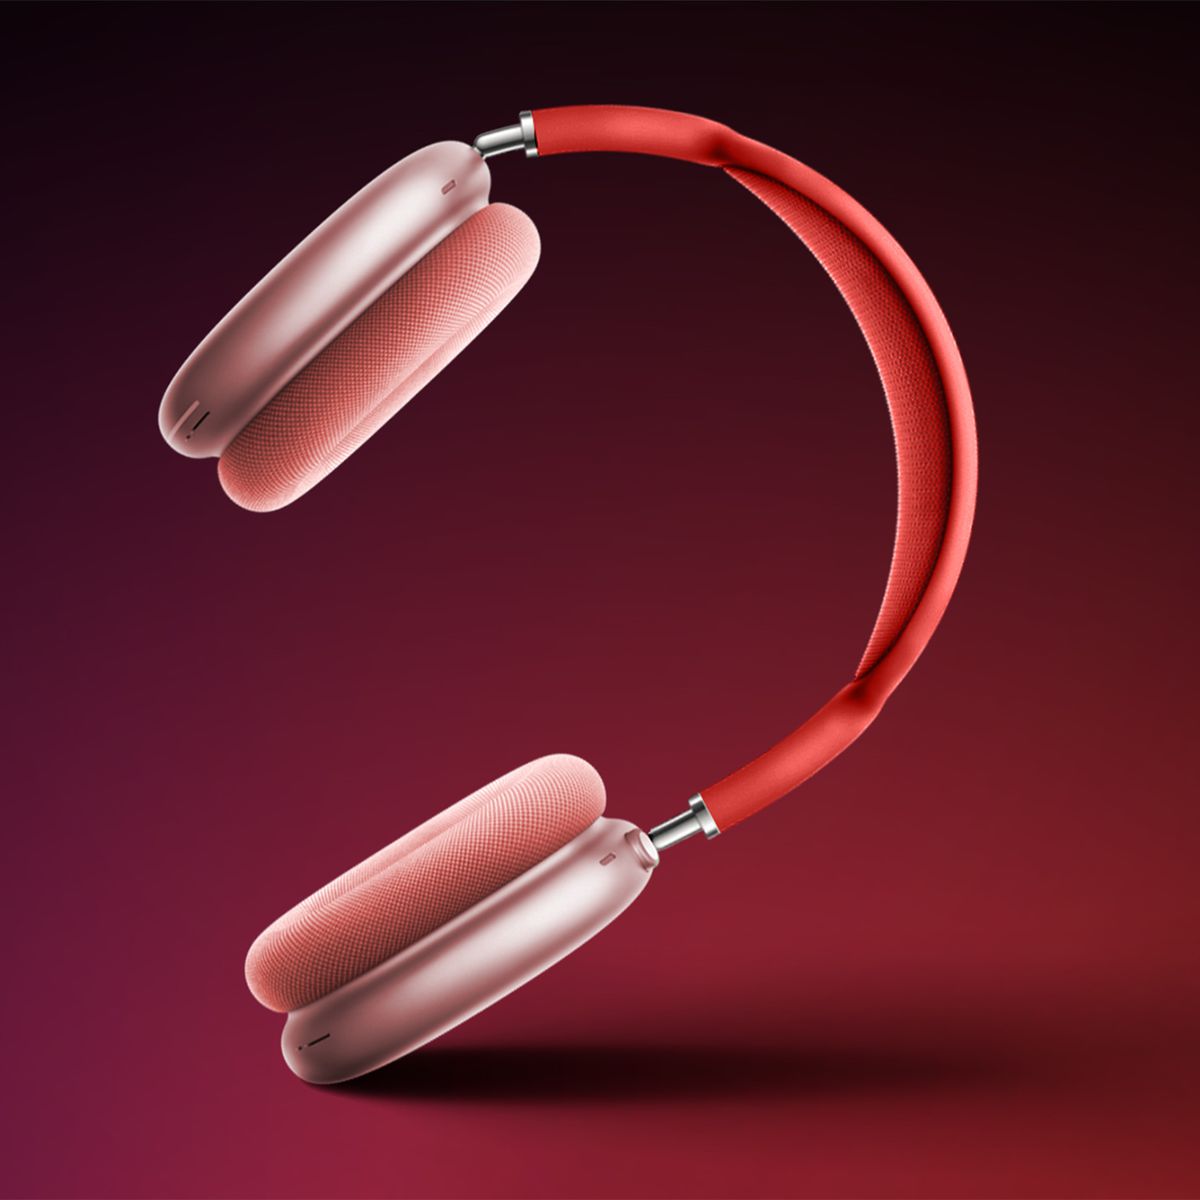 Apple AirPods Max Headphones, Features & Price